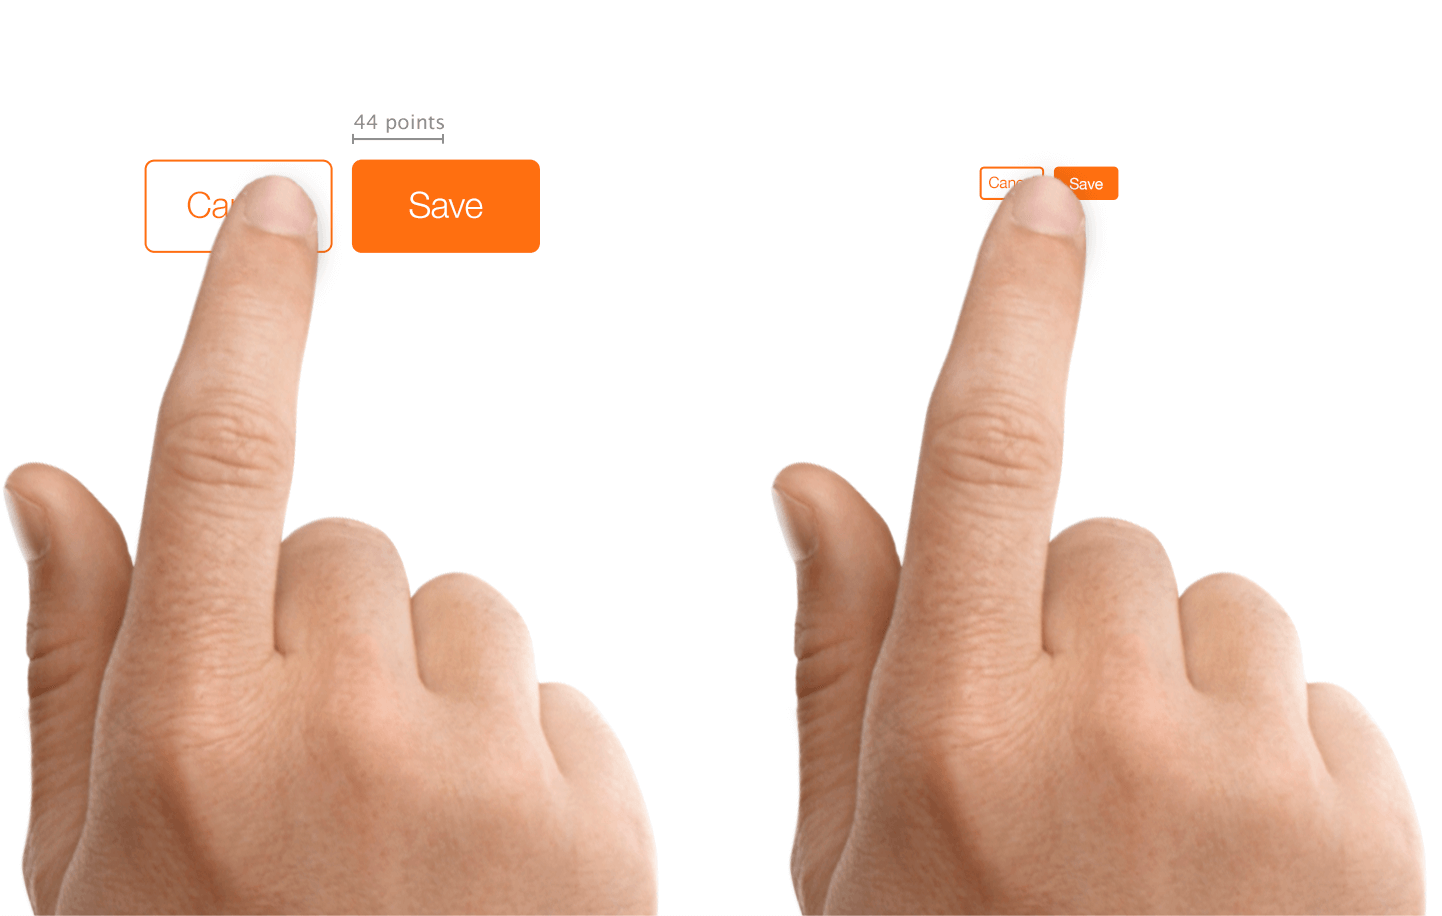 Good vs bad touch targets. Image by [Apple](https://developer.apple.com/design/tips/)